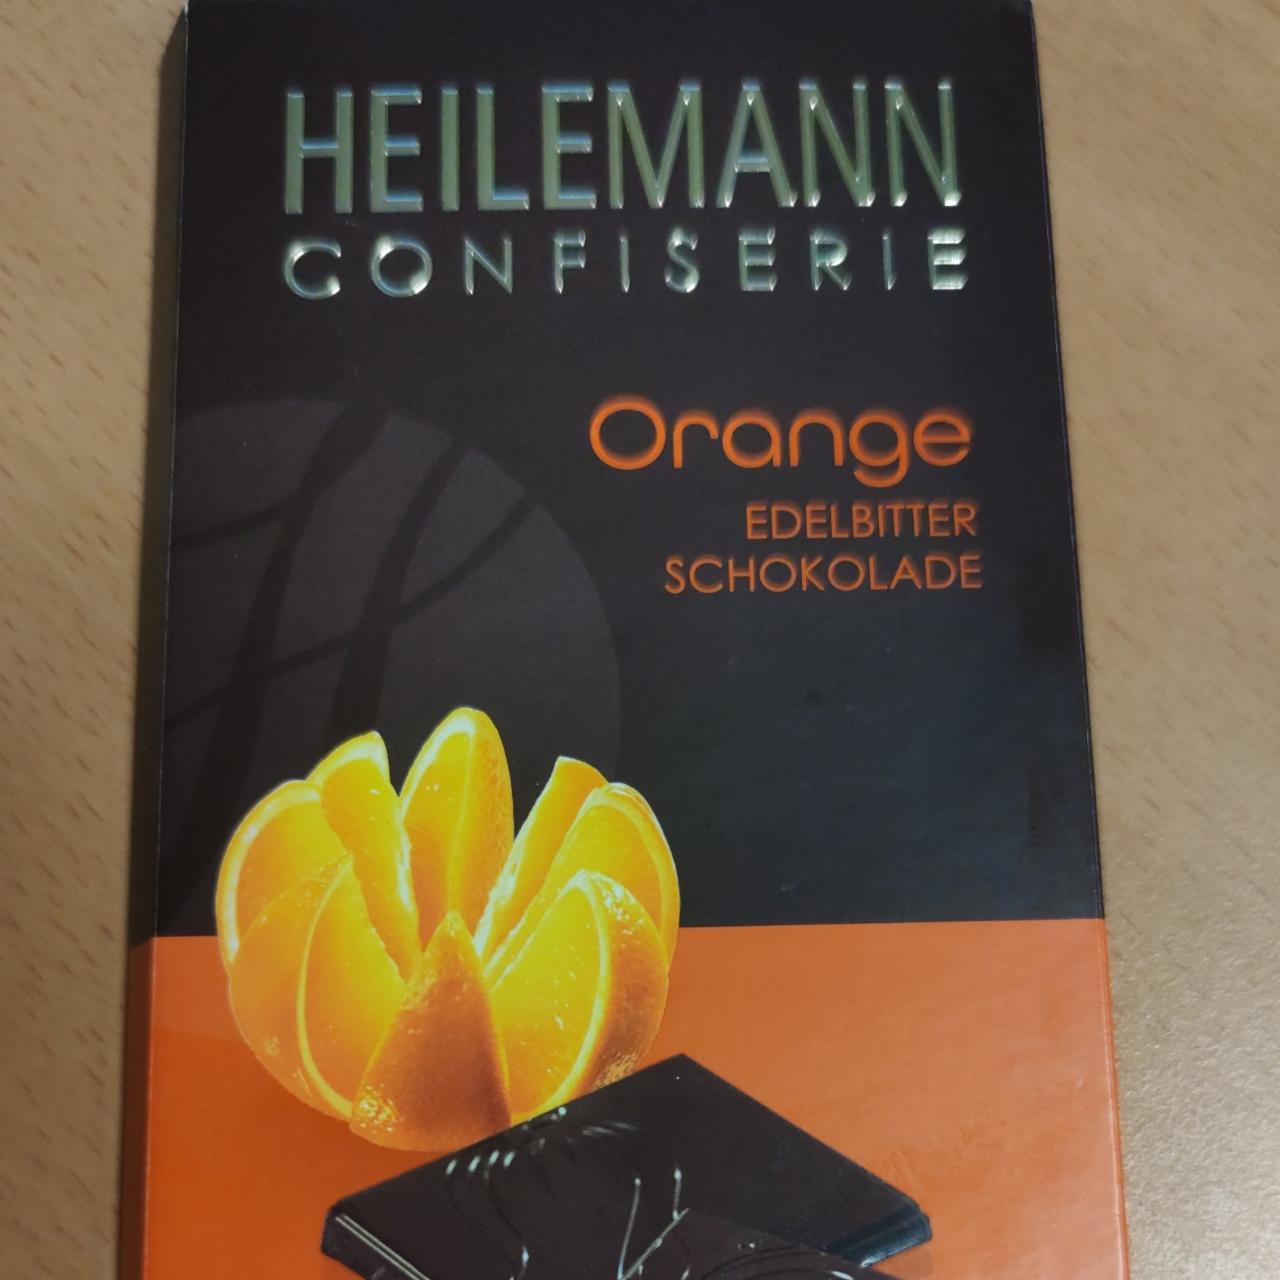 Képek - Orange edelbitter schokolade Heilemann confiserie